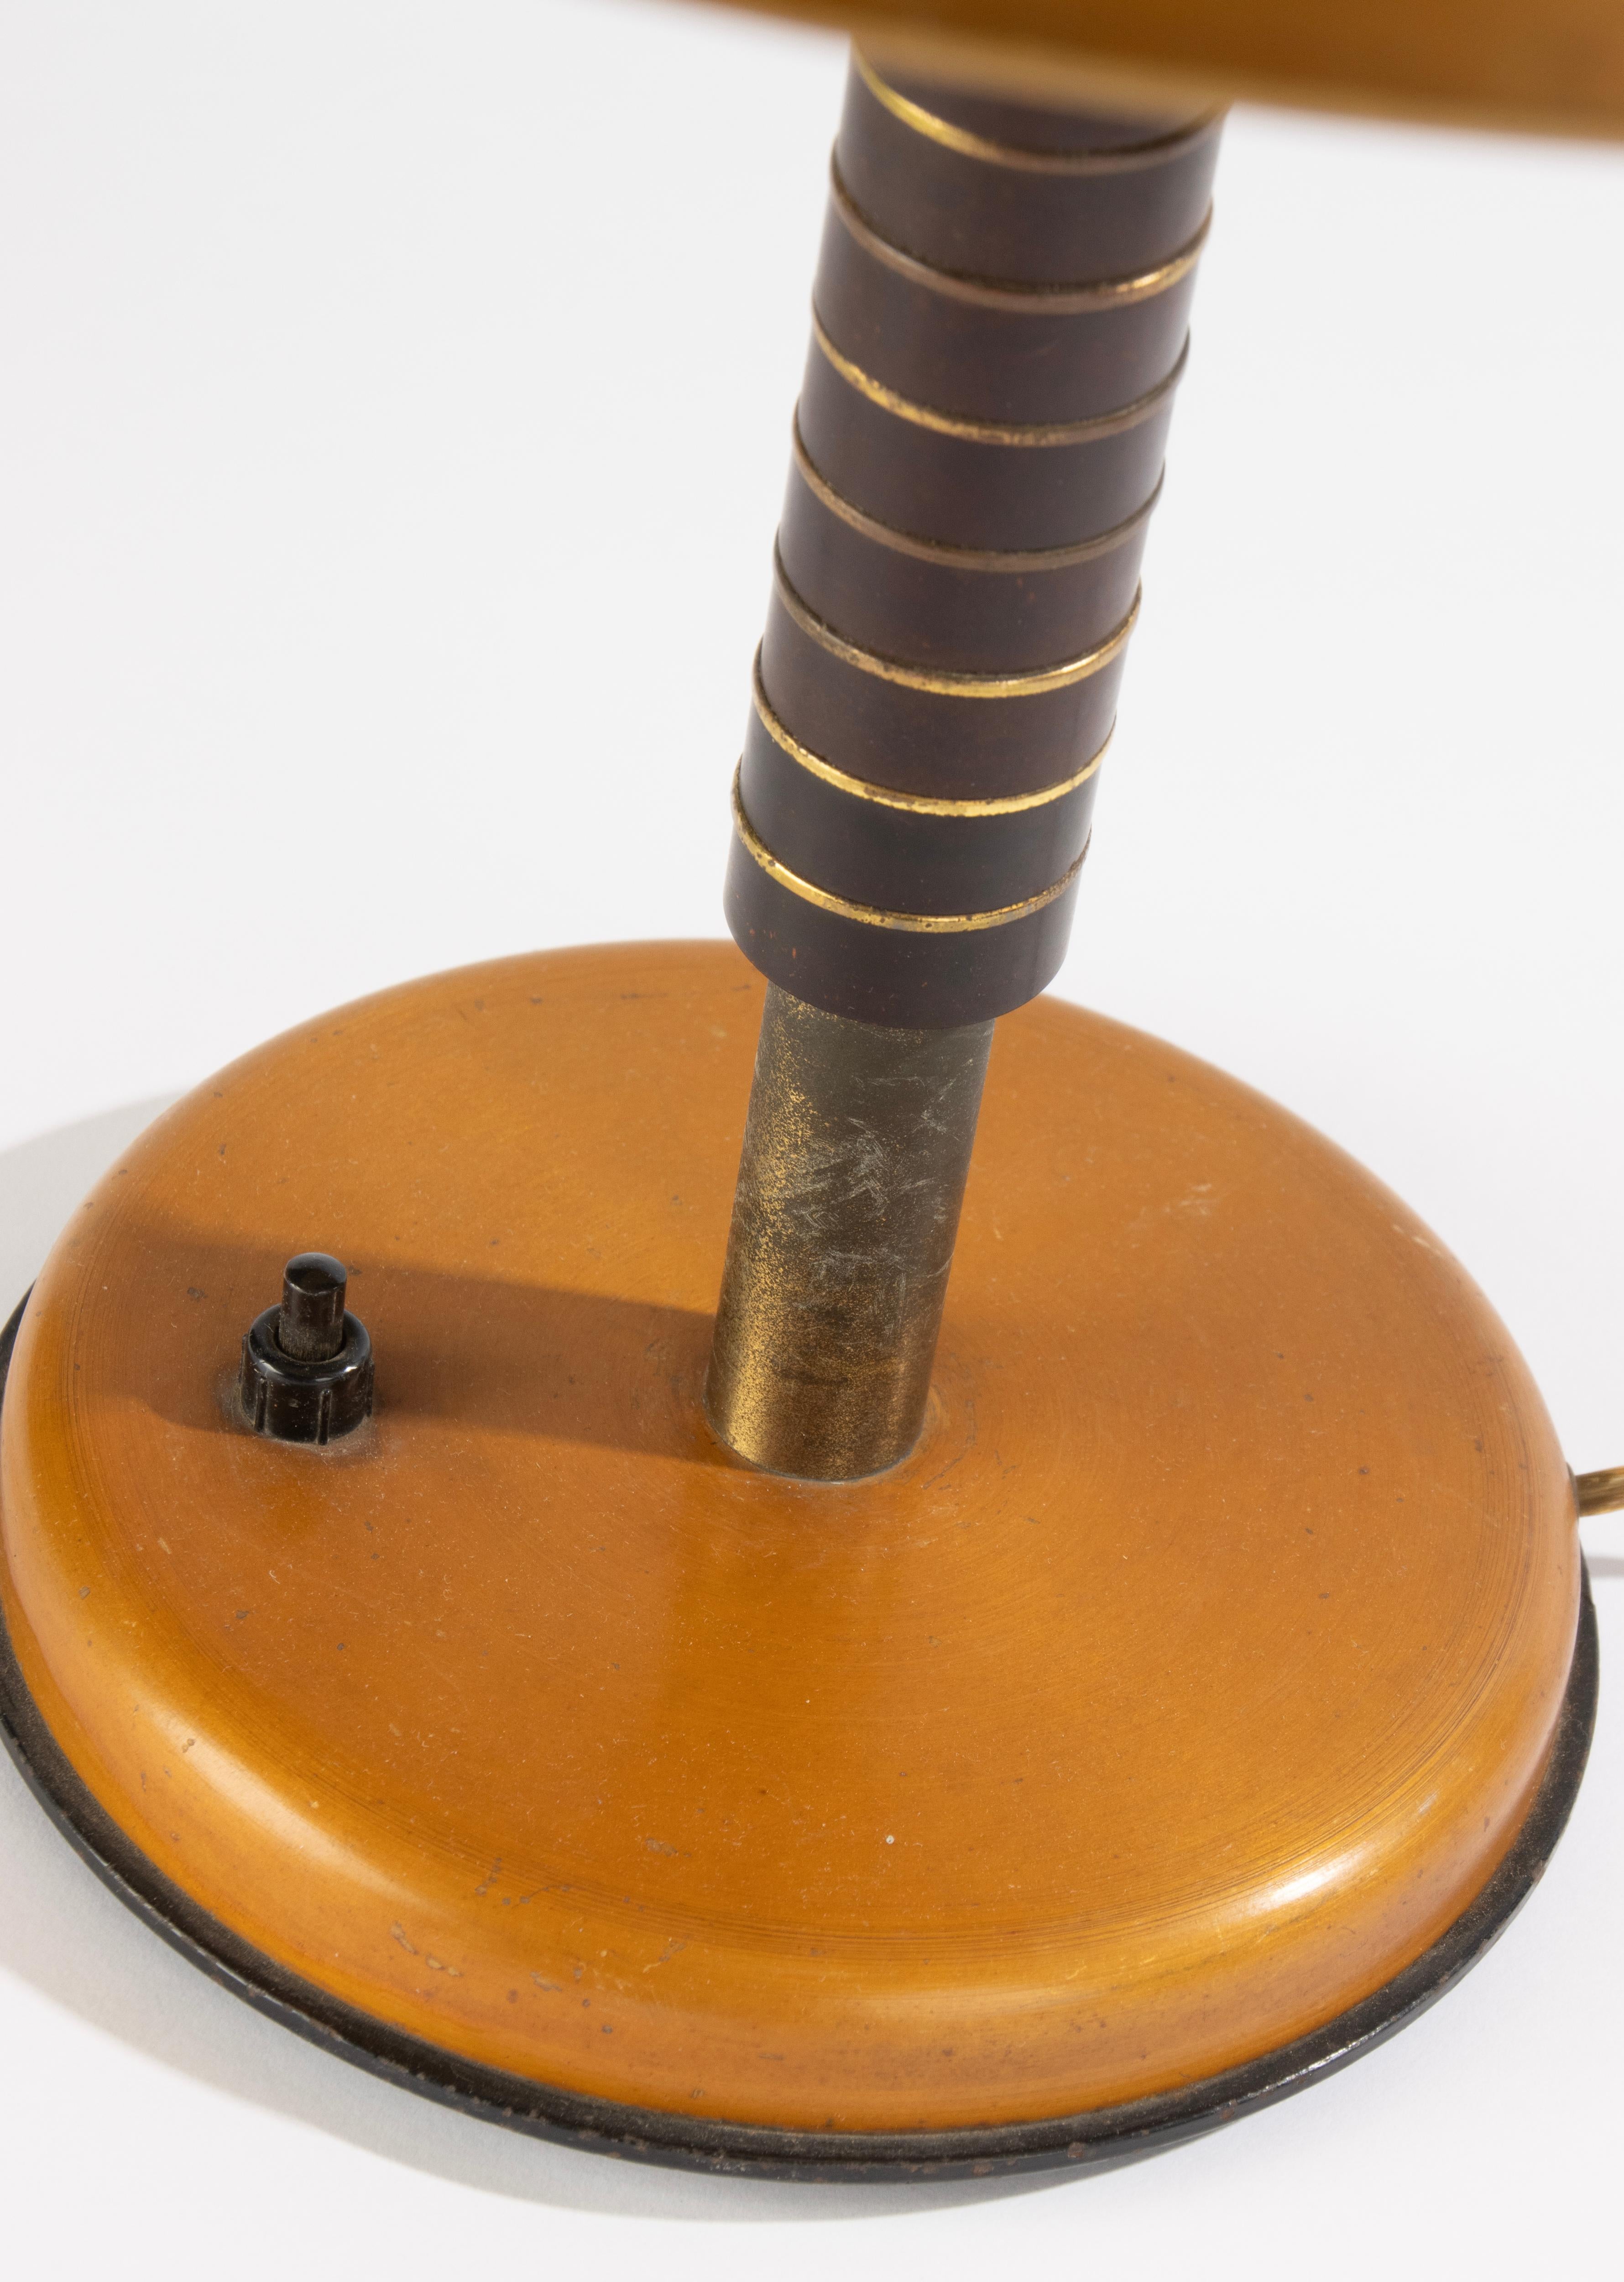 Vintage Bauhaus Table Lamp - 1940's - Bakelite and Metal  For Sale 9